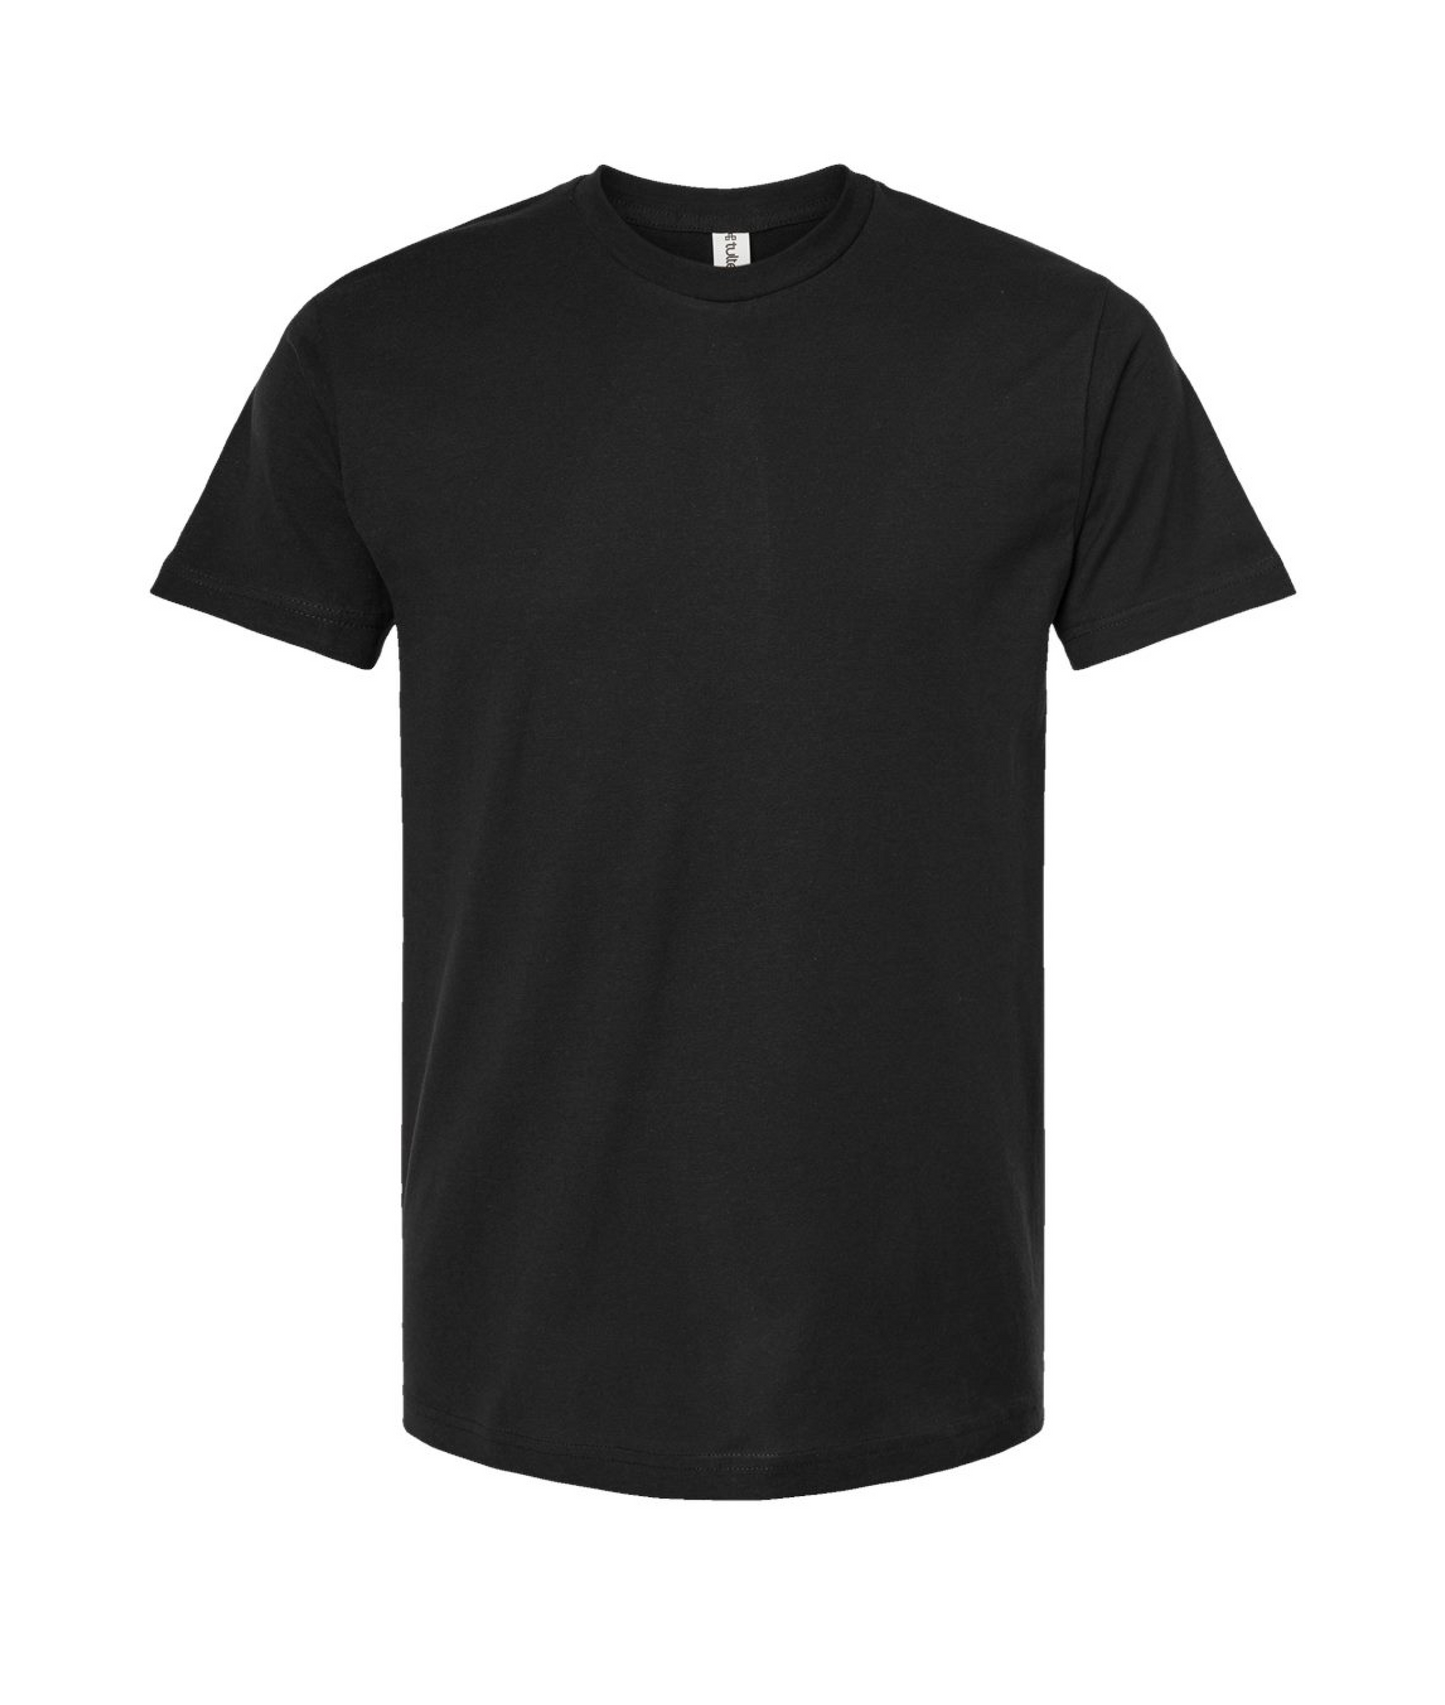 Scuba Steve - PLAY - Black T-Shirt